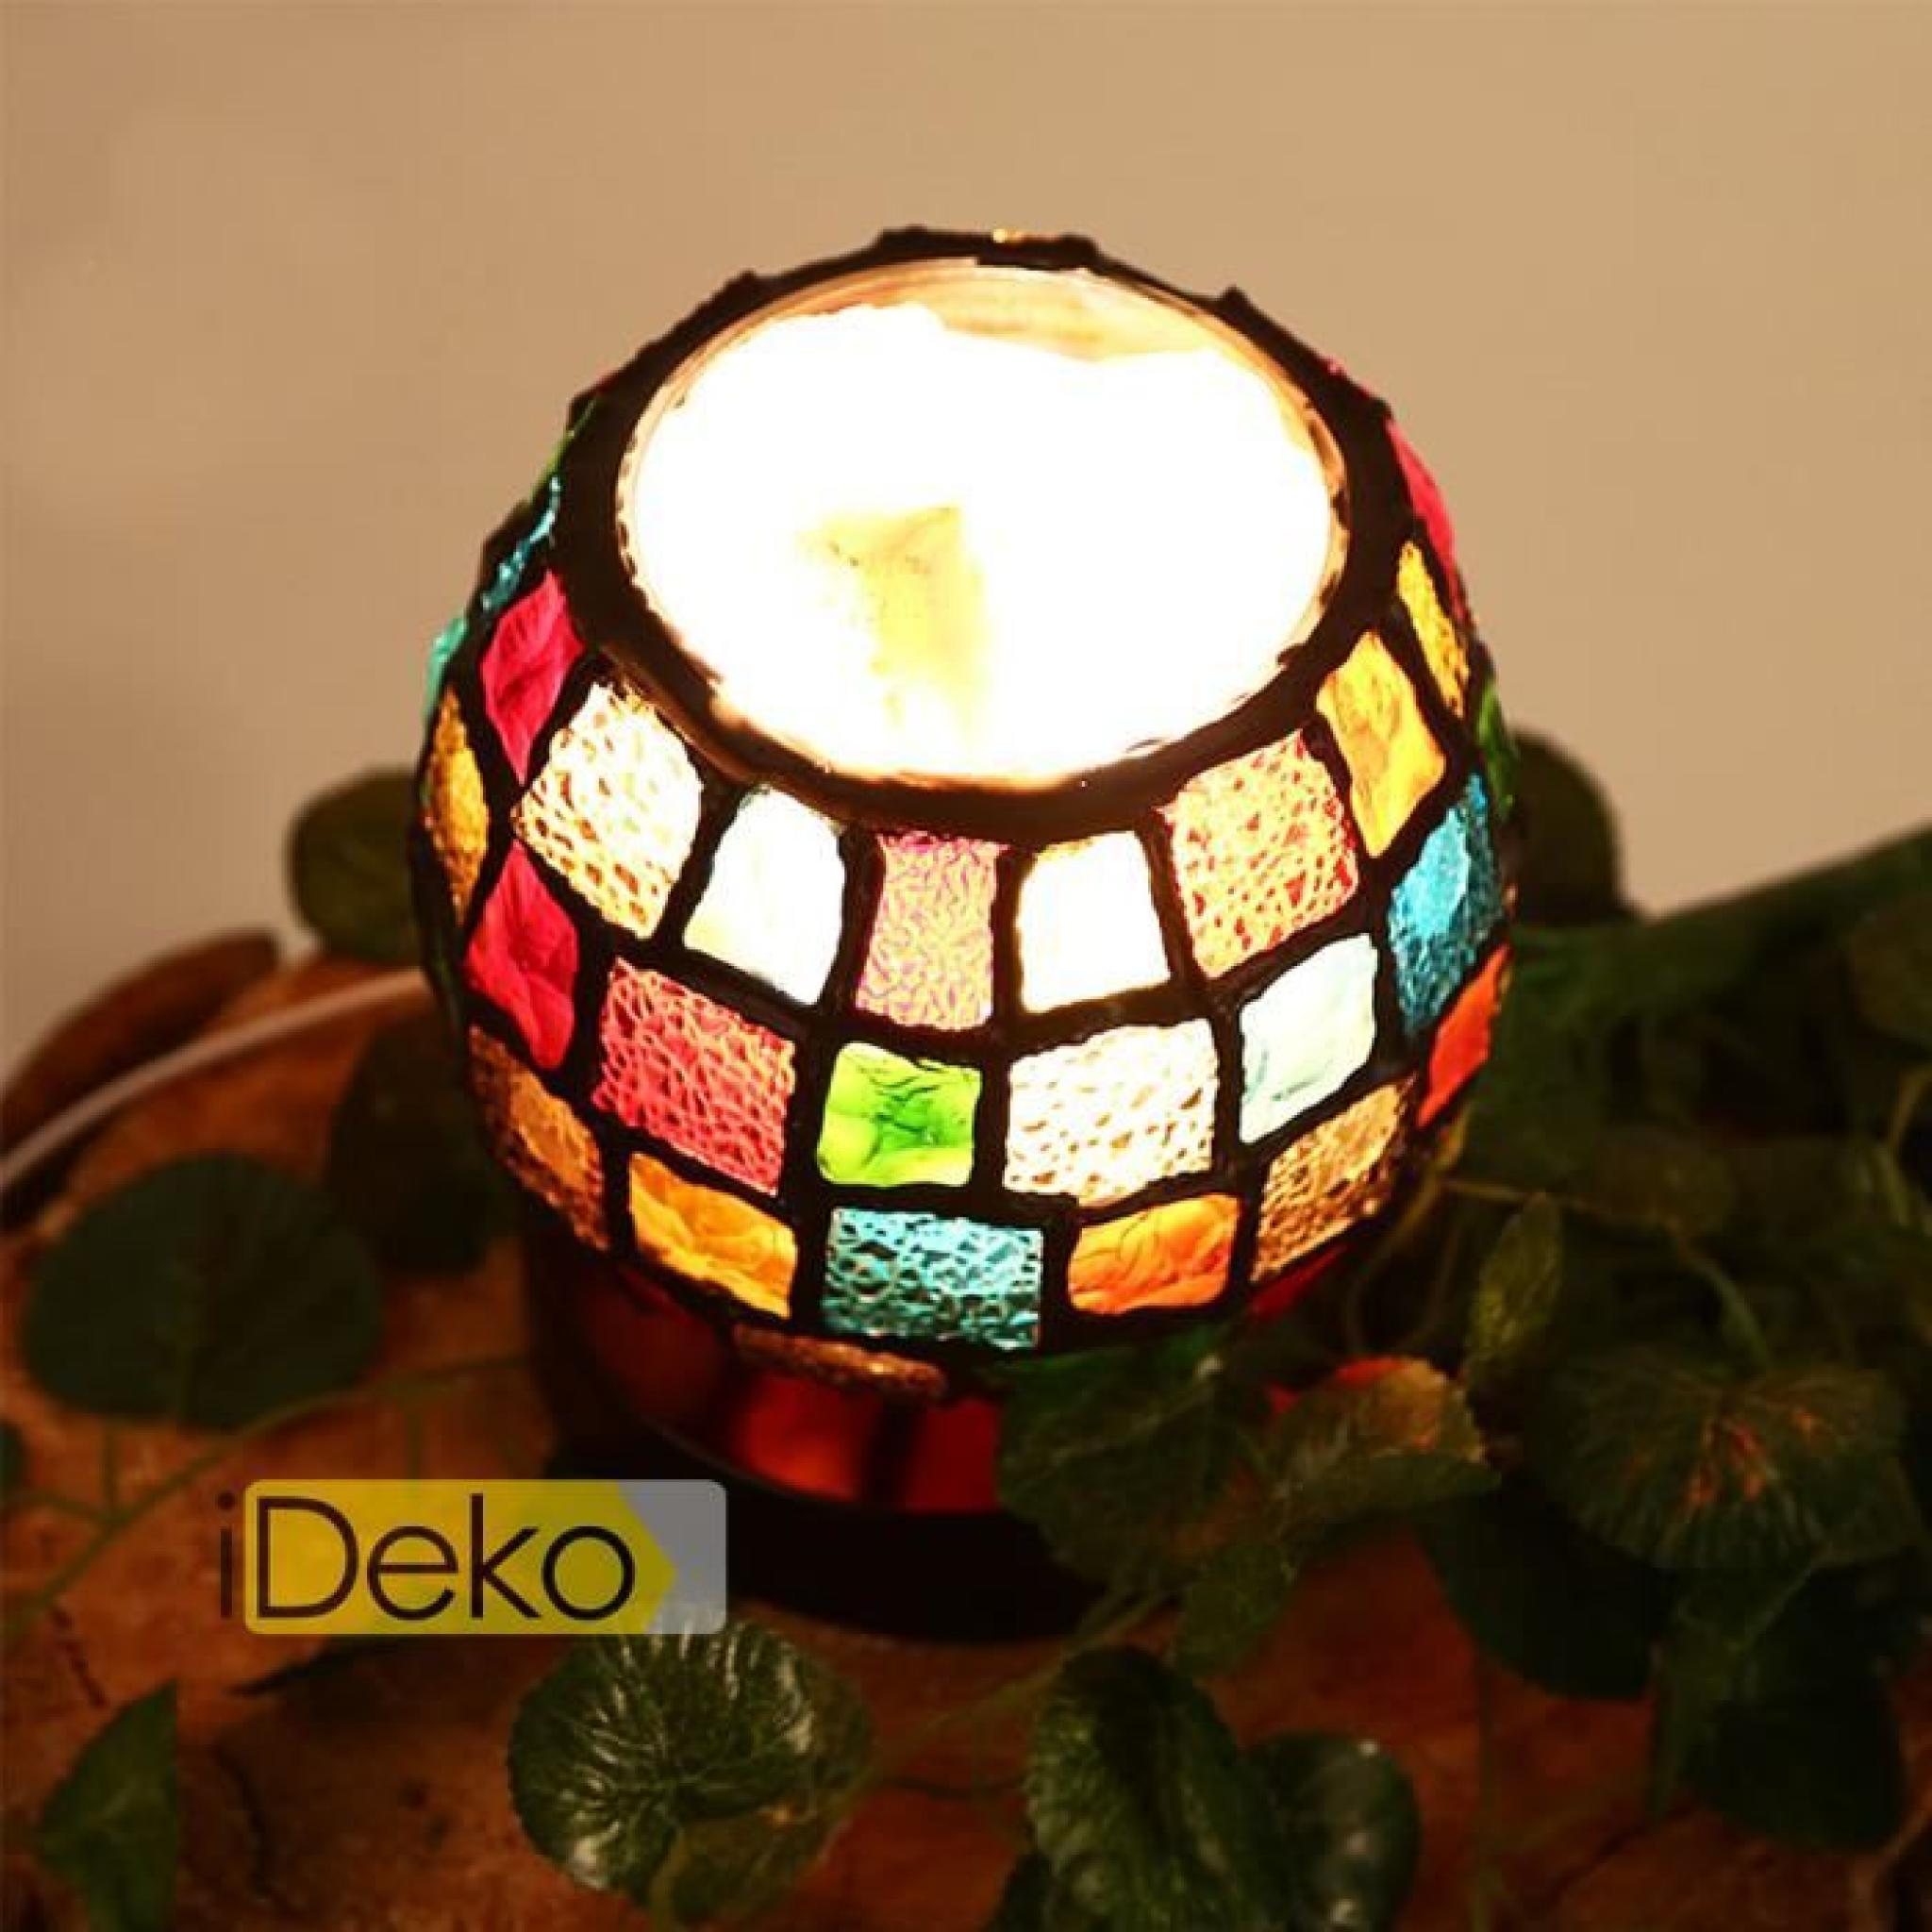 iDeko® Lampe à poser bureau table Art design manuel antique de vitrail verre Plexiglas style jardin de fleurs sakura  pas cher